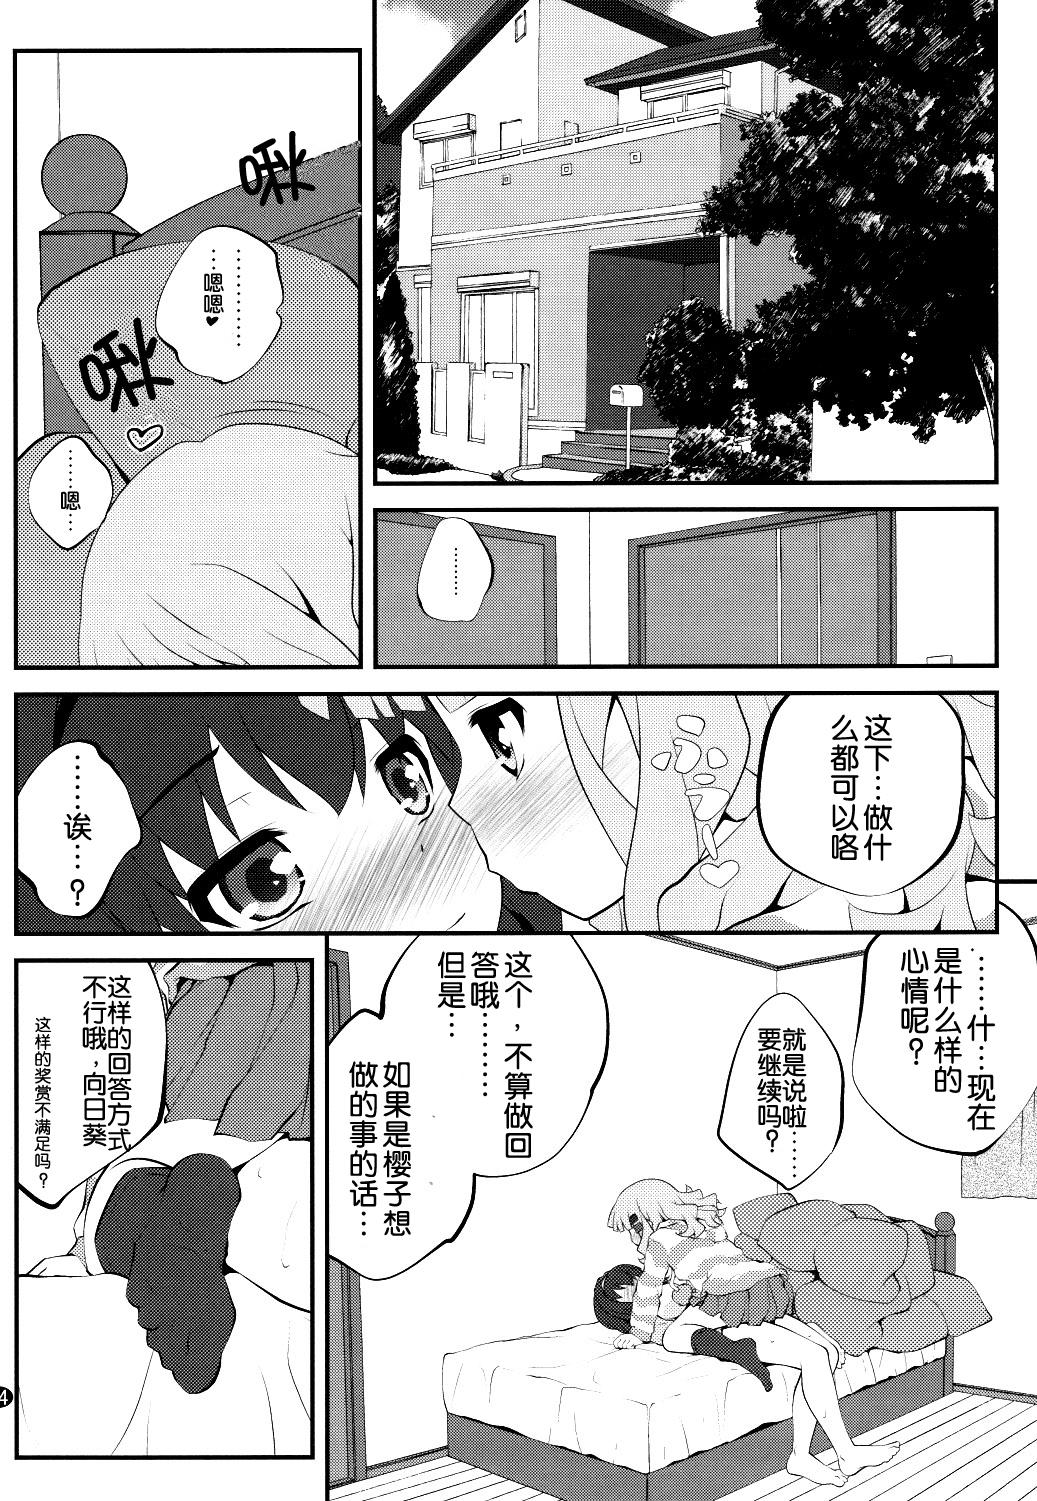 Mum Himegoto Flowers 7 - Yuruyuri Milf - Page 4